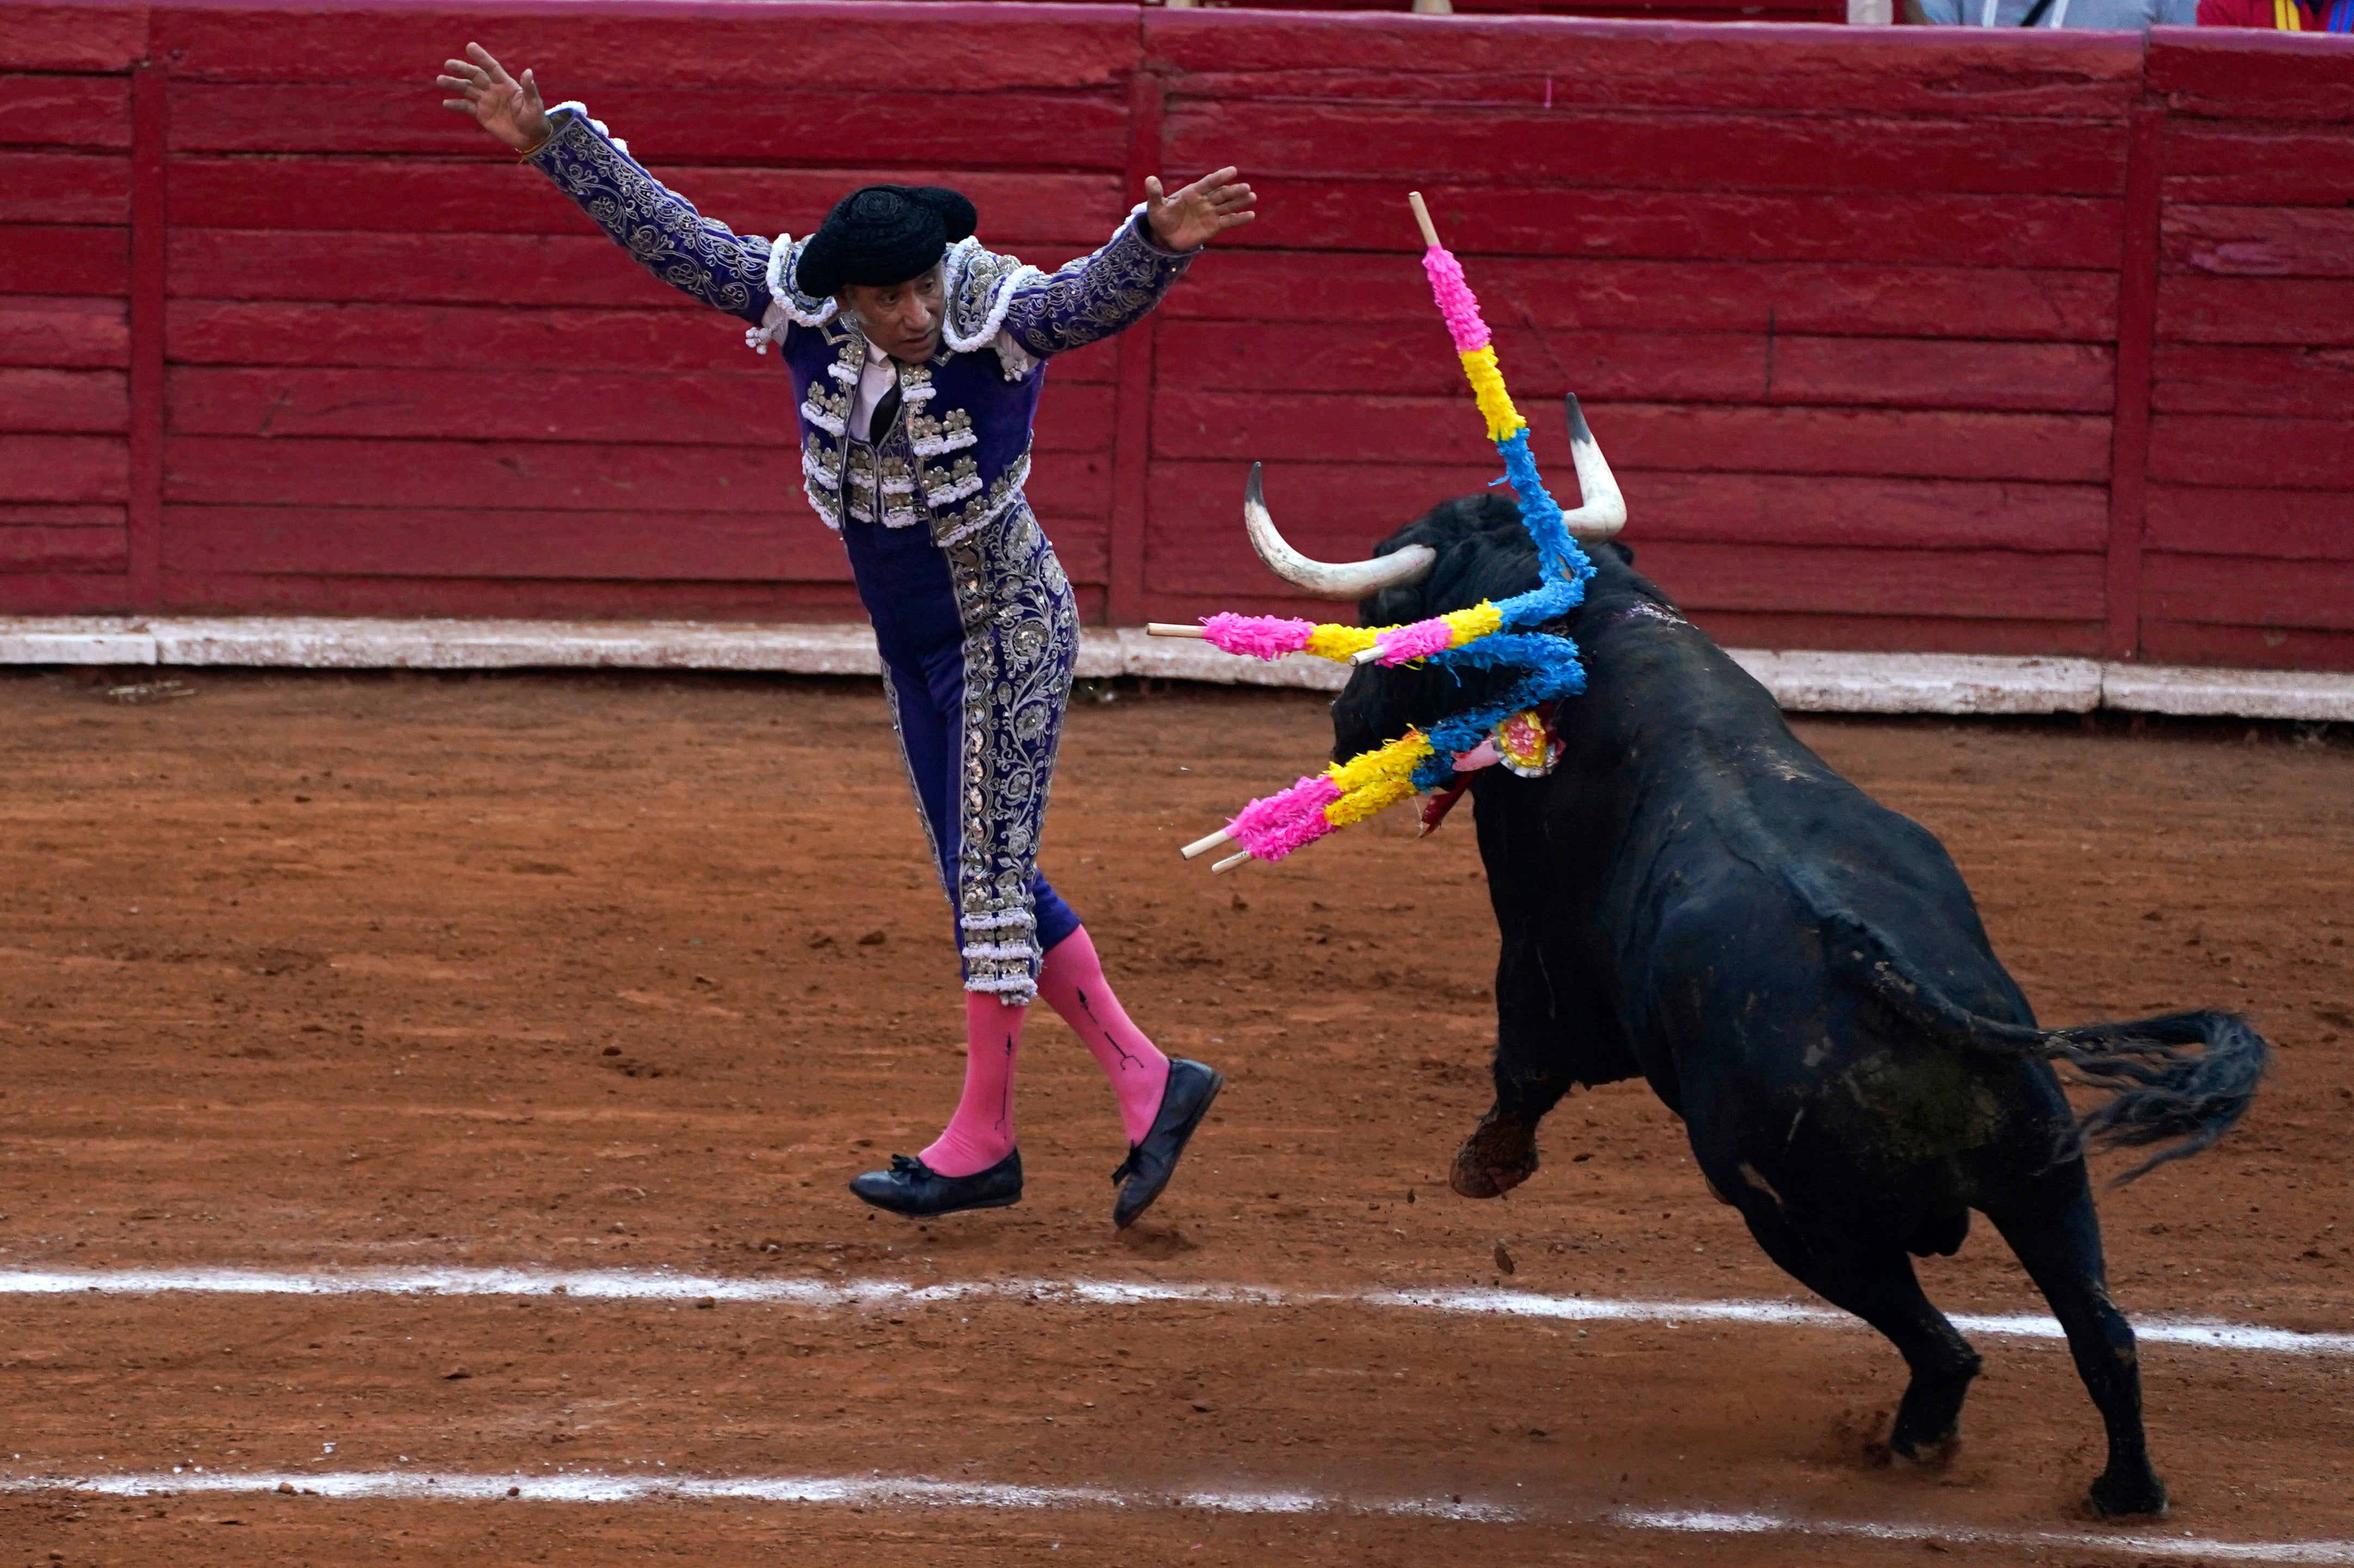 bull fighting